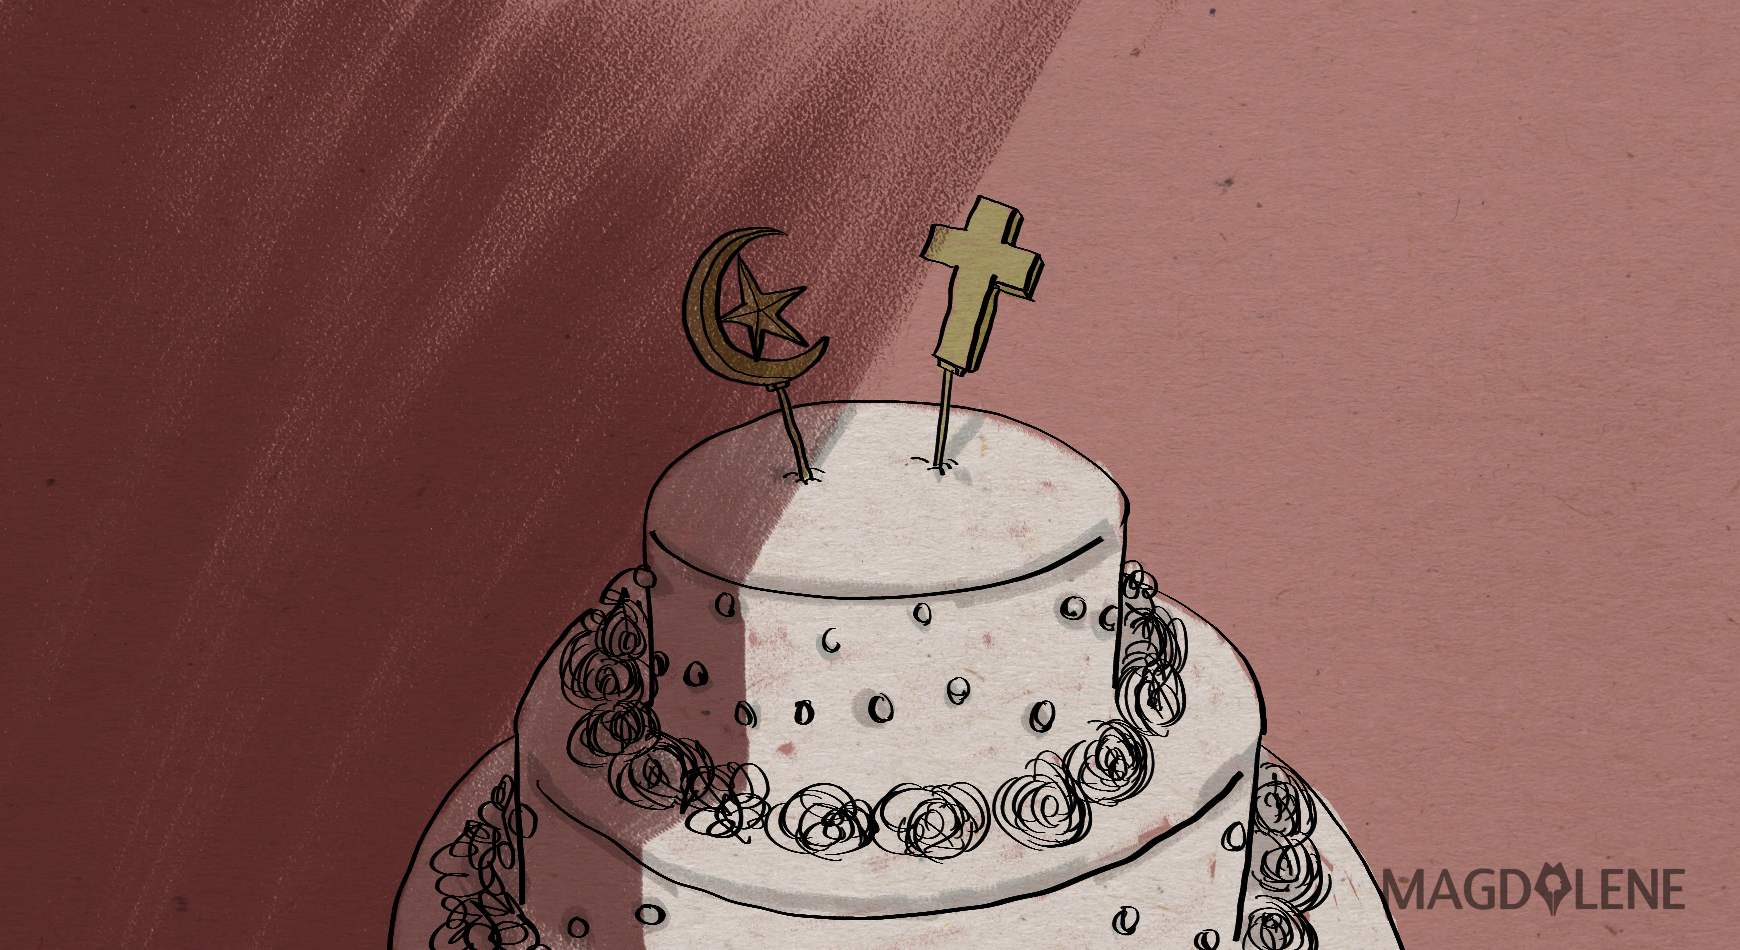 Making Interfaith Marriage Legal a Tough But Necessary Battle